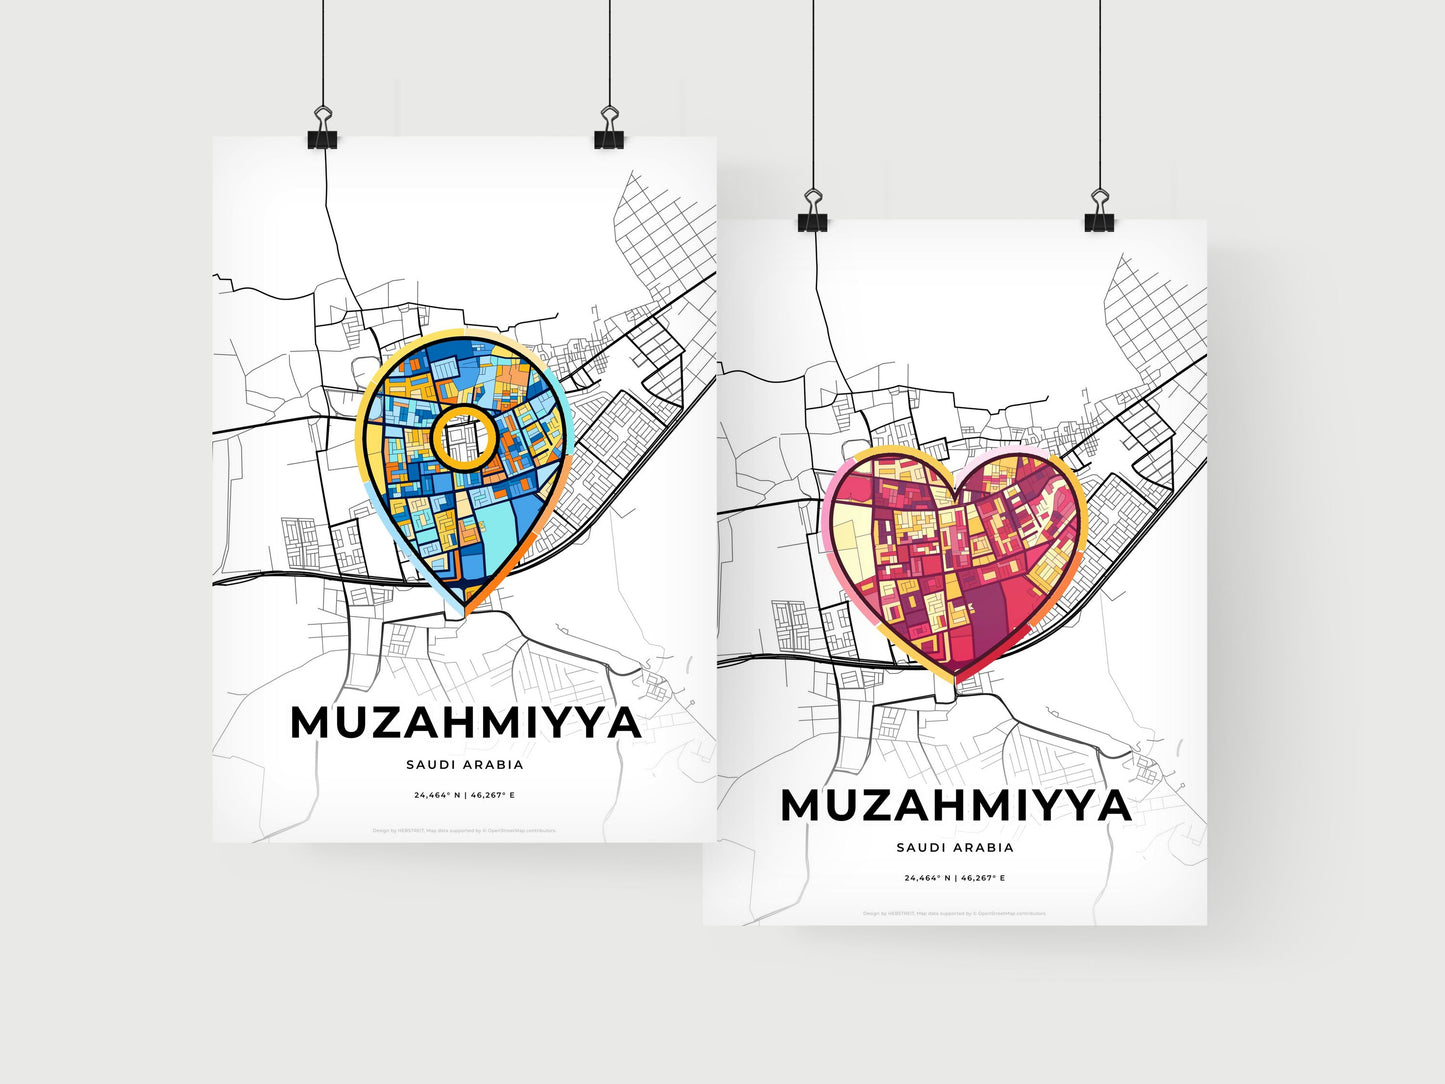 MUZAHMIYYA SAUDI ARABIA minimal art map with a colorful icon.